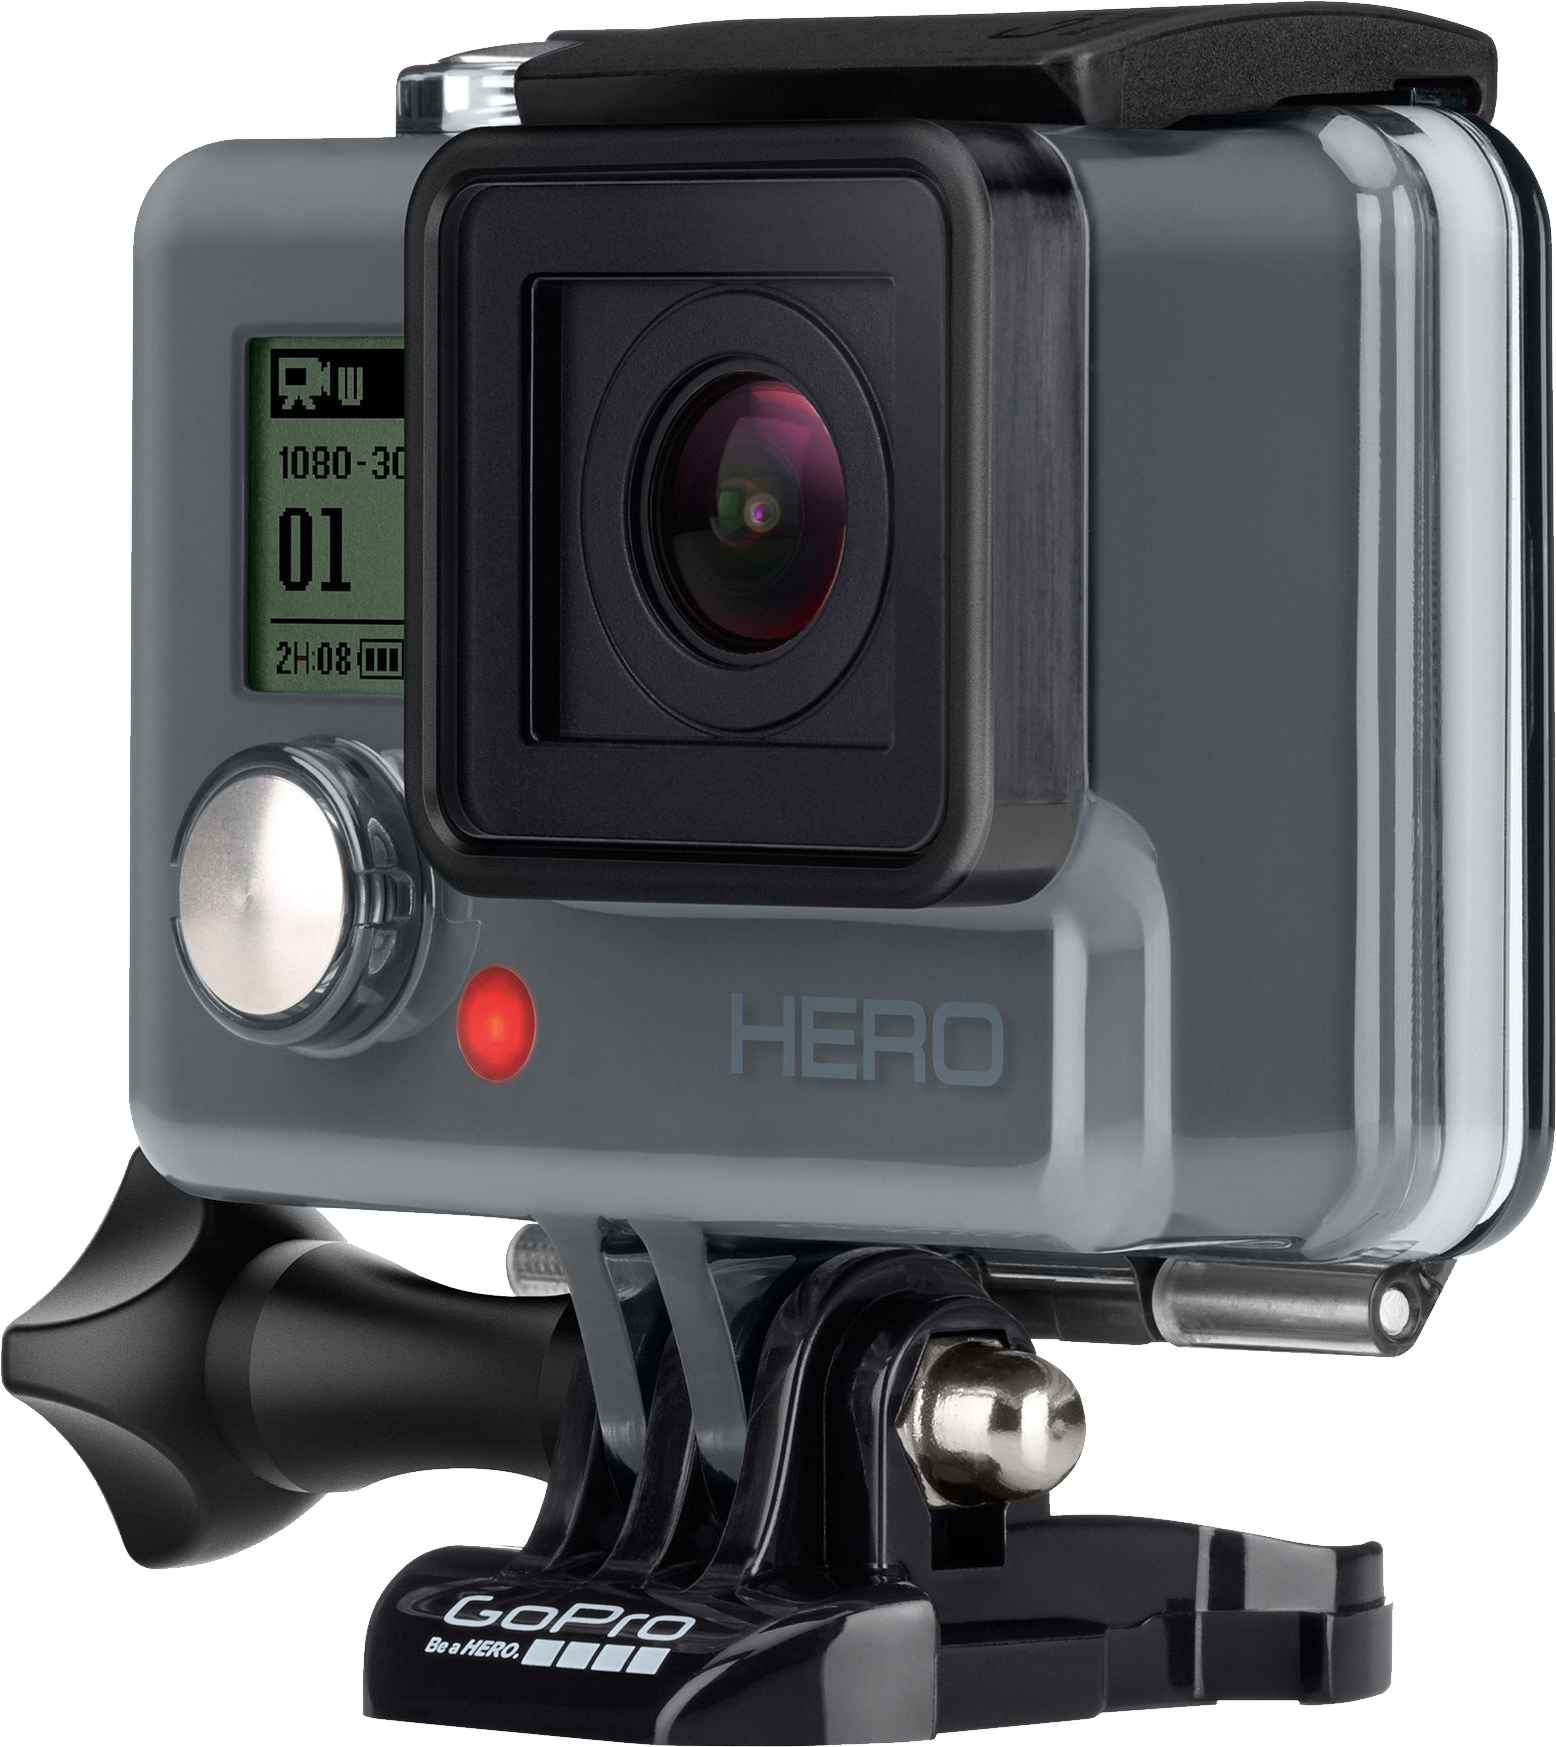 Gopro Hero Camera Png - Gopro Camera, Transparent background PNG HD thumbnail